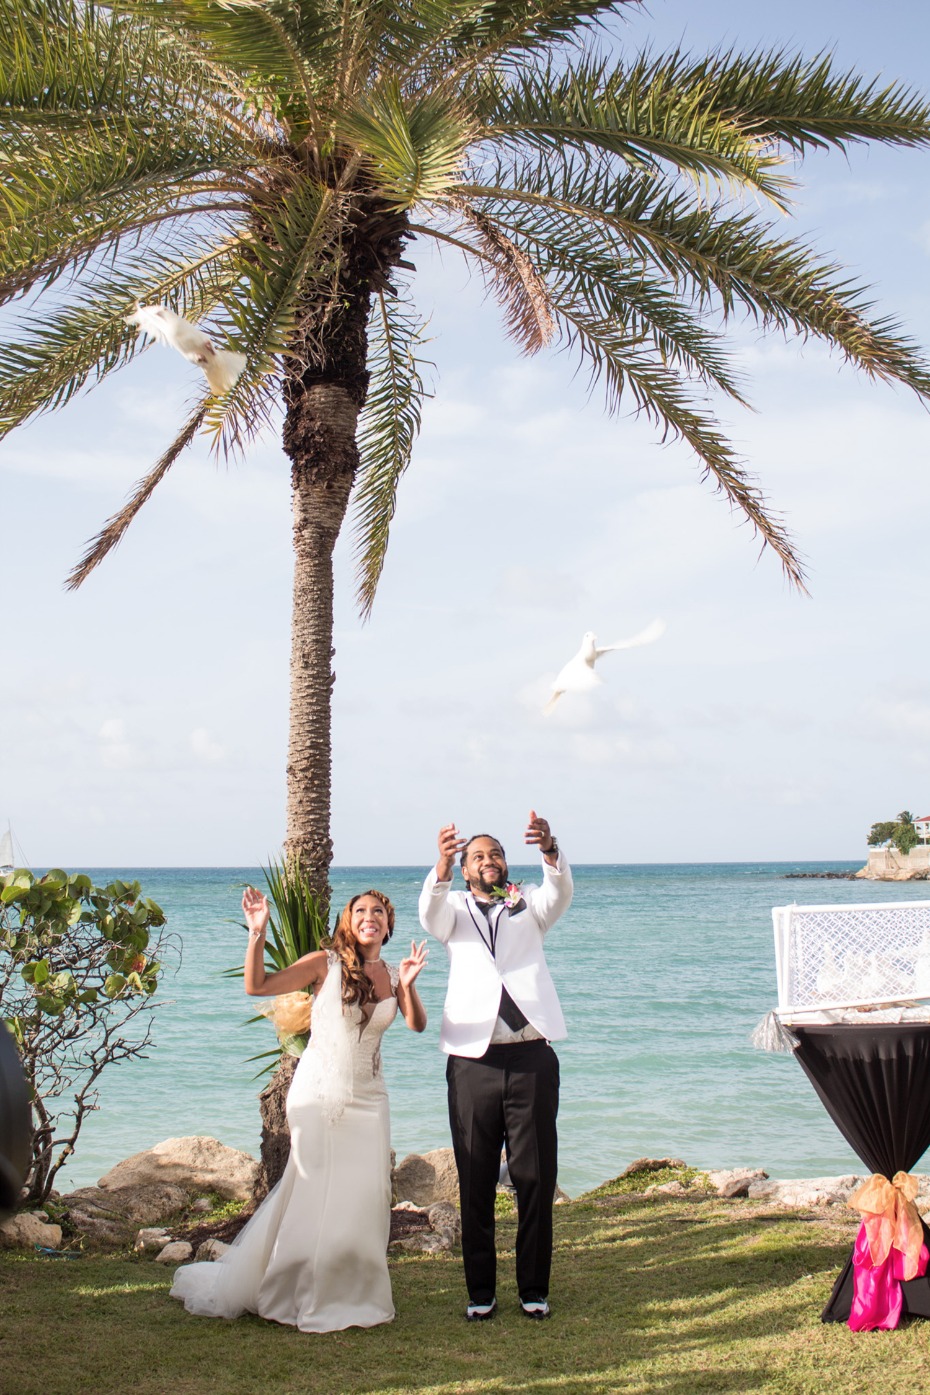 Dove release for their dream wedding in Antigua